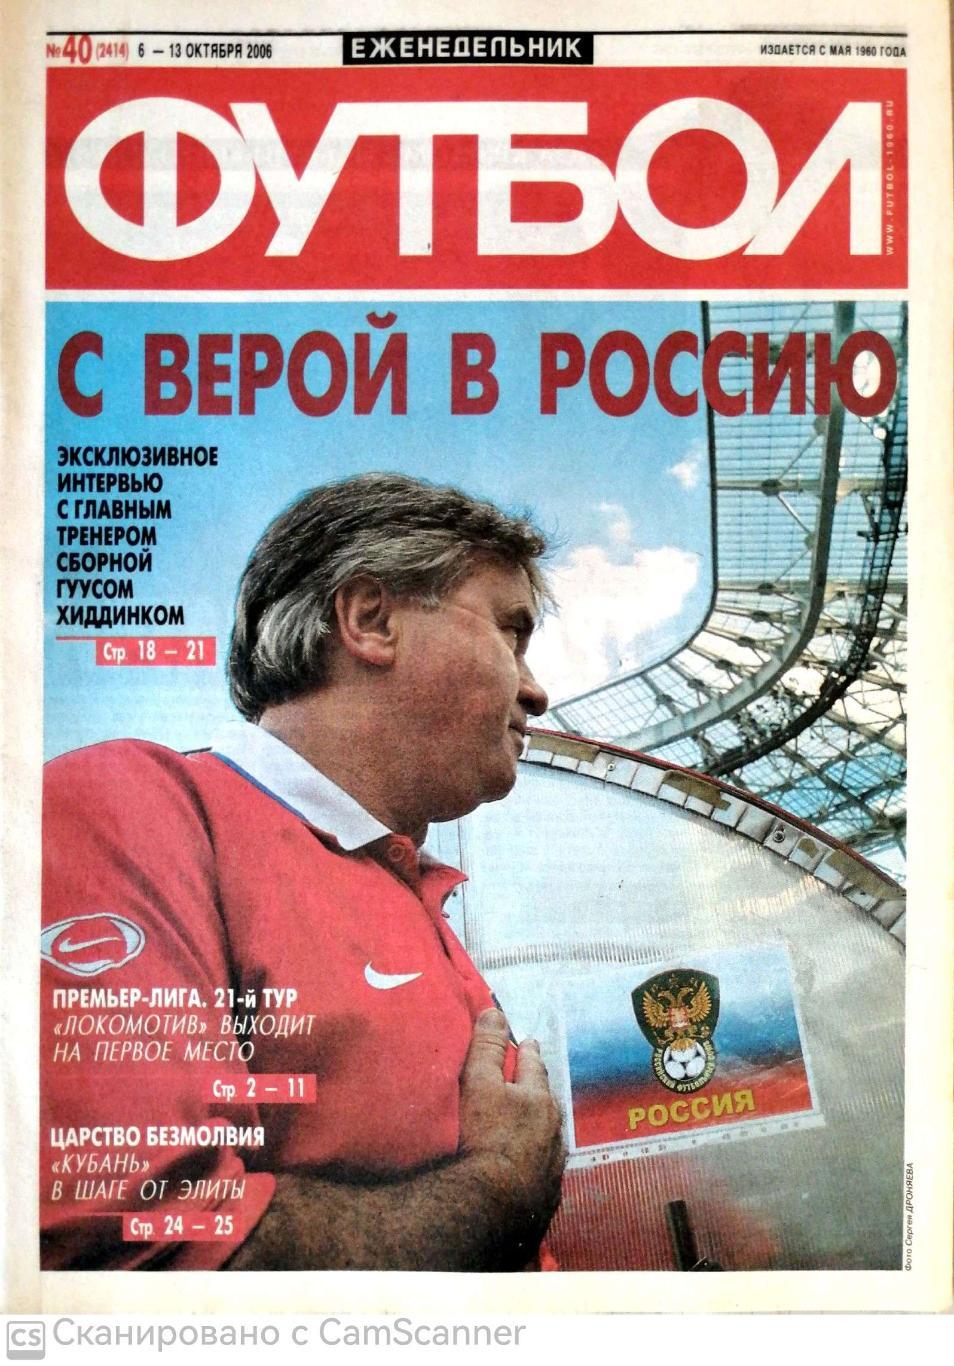 Еженедельник «Футбол» (Москва). 2006 год. №40